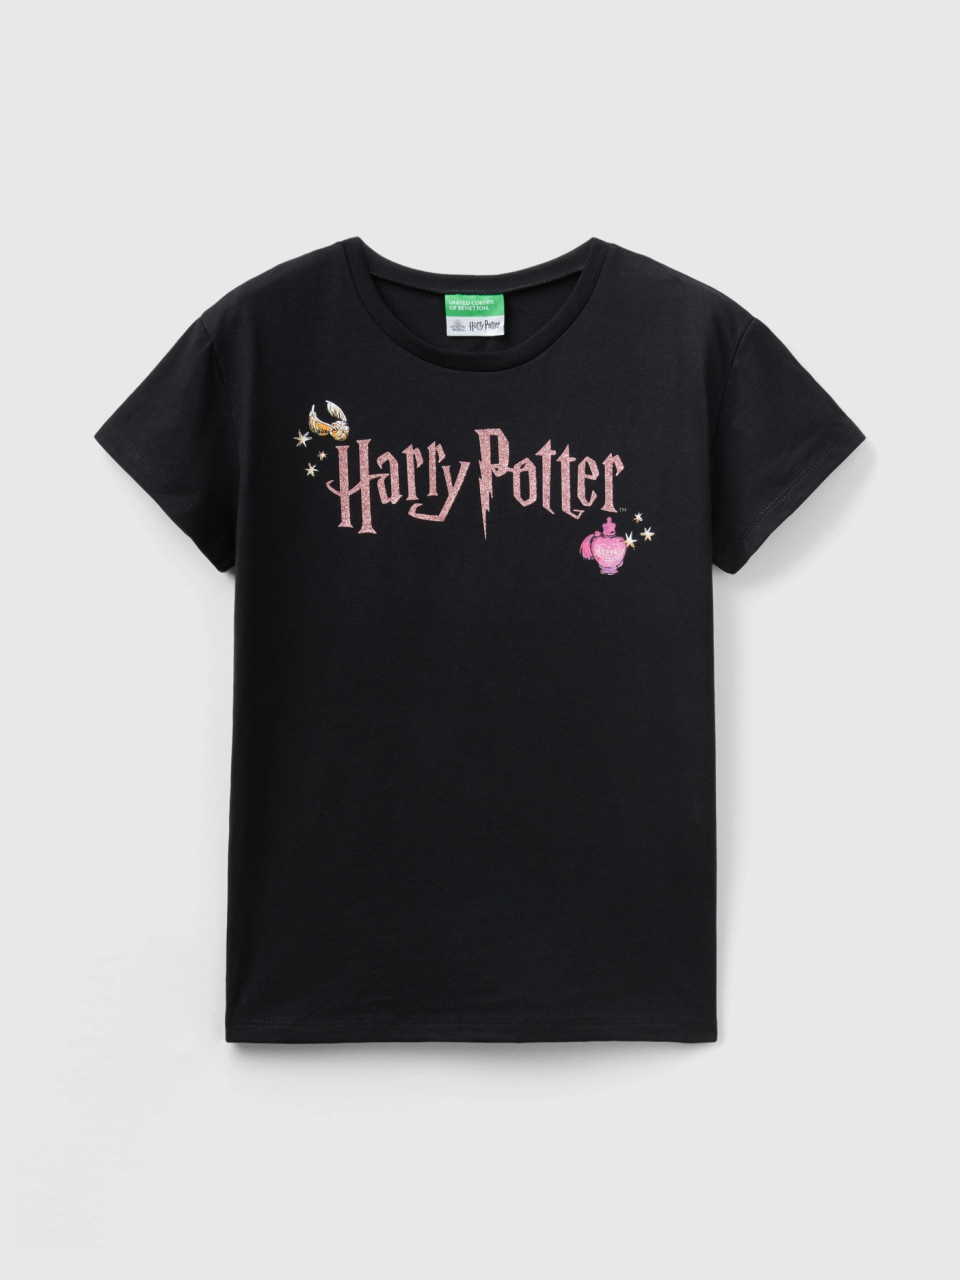 Benetton, Short Sleeve Harry Potter T-shirt, Black, Kids